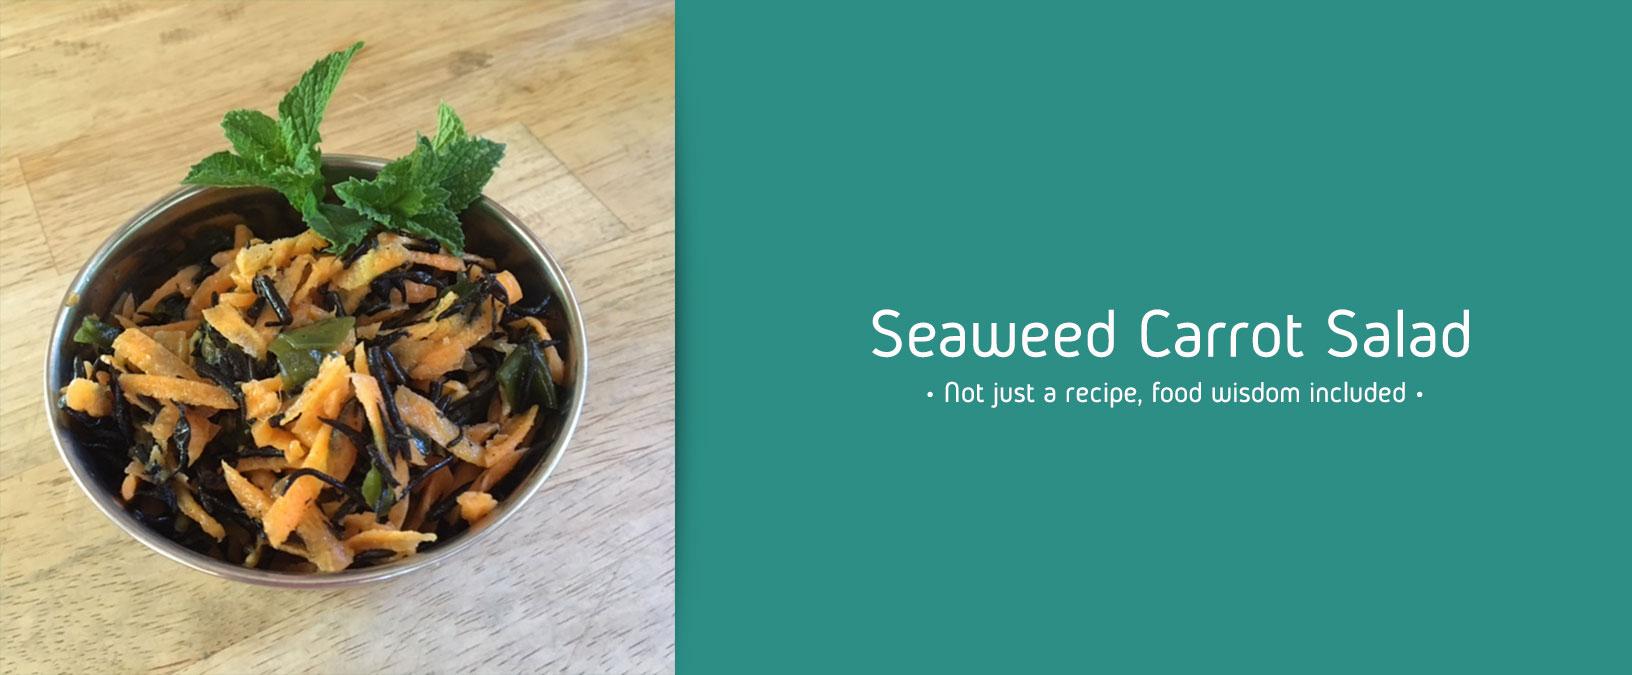 Seaweed Carrot Salad